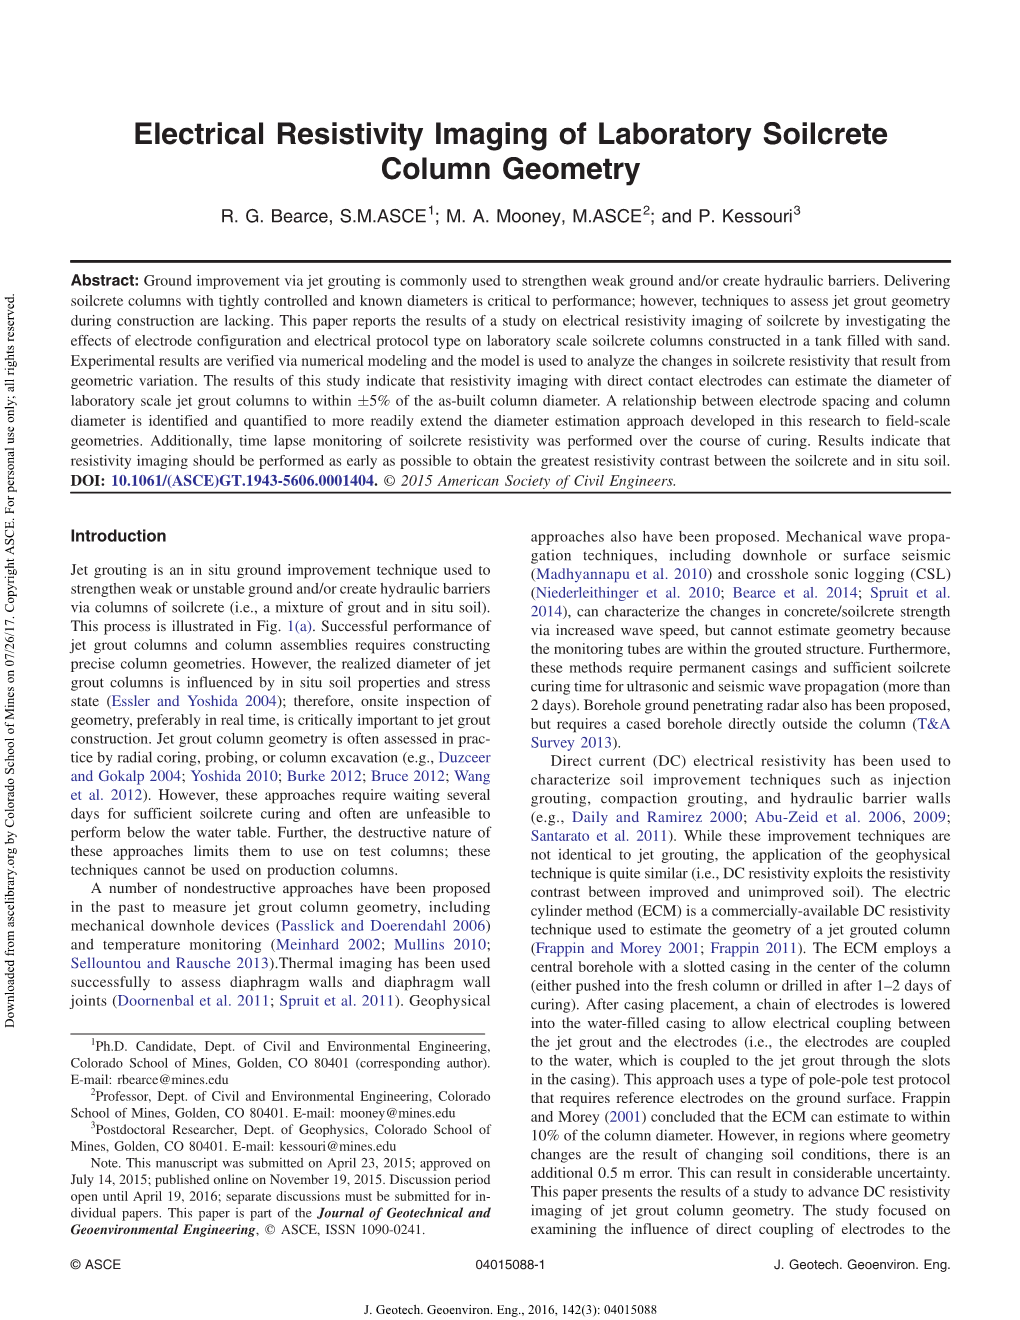 Electrical Resistivity Imaging of Laboratory Soilcrete Column Geometry